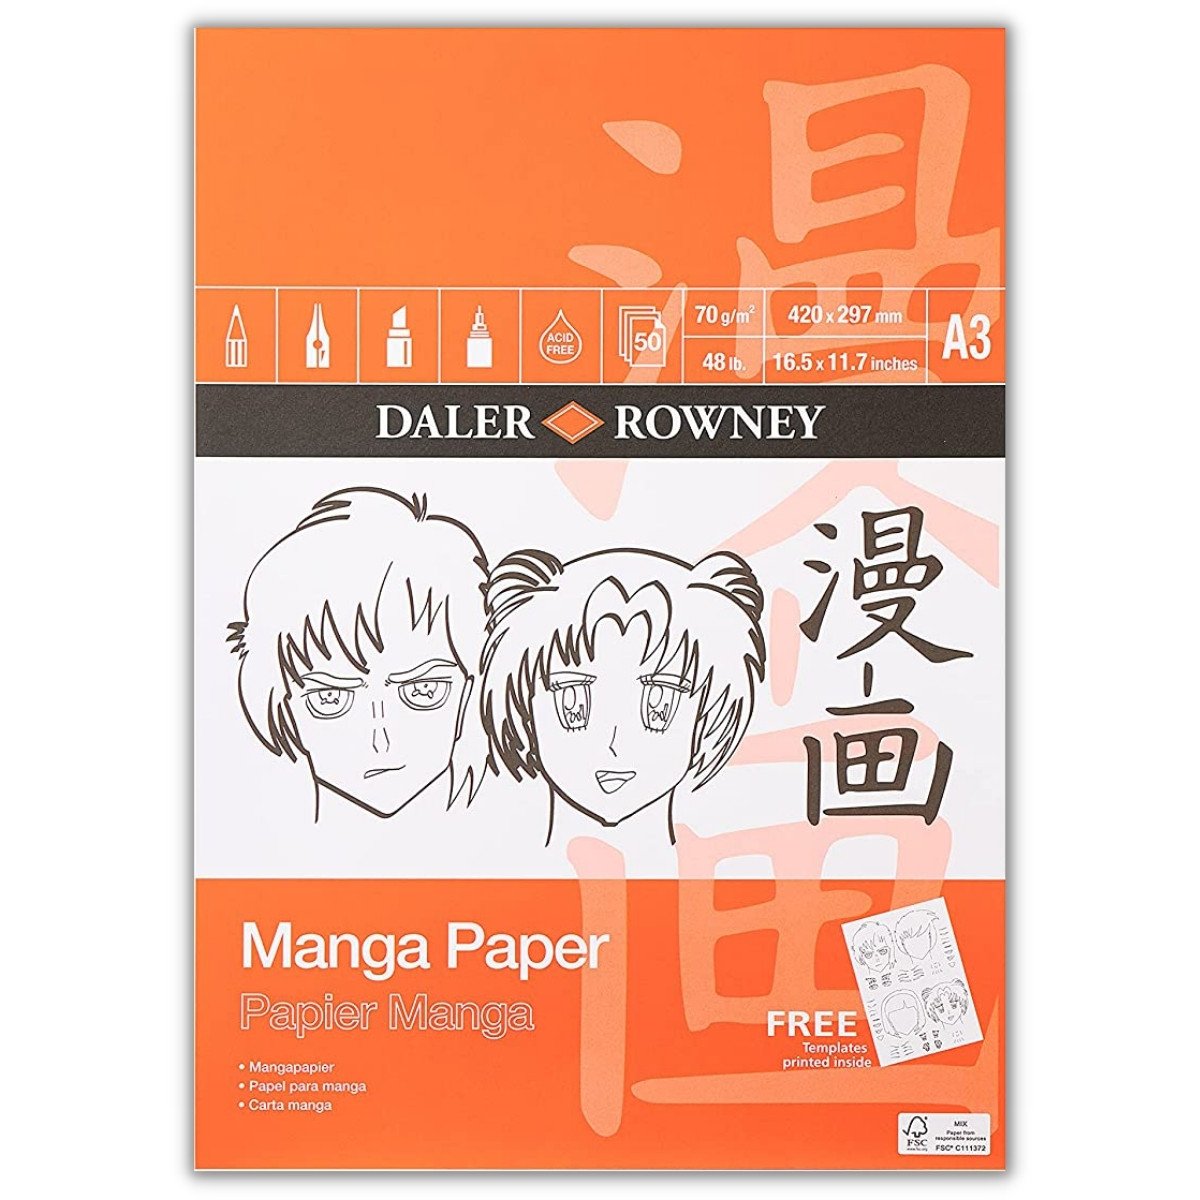 Daler Rowney Manga Defteri 70gr A3 50yp